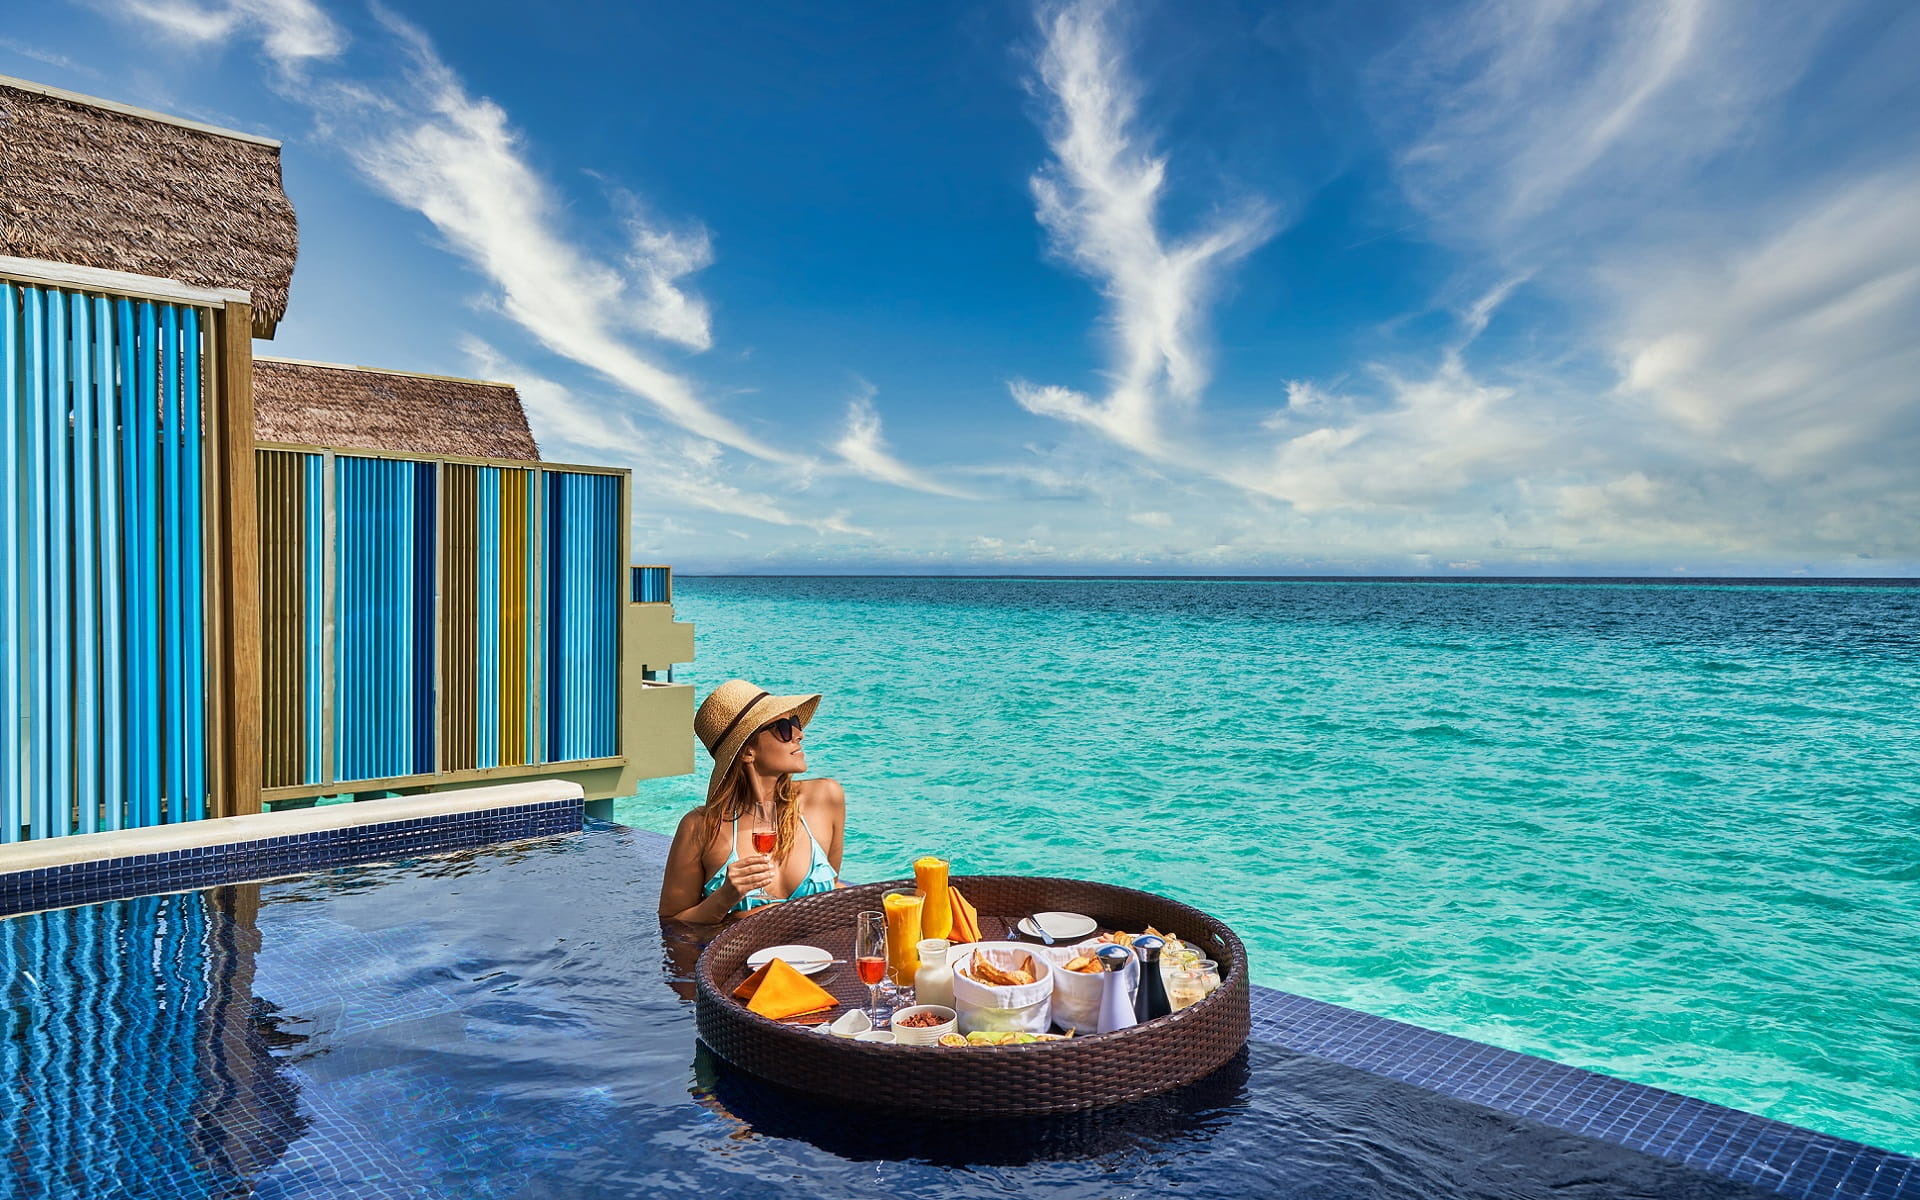 Hard Rock Hotel Maldives Resort 5* by Perfect Tour